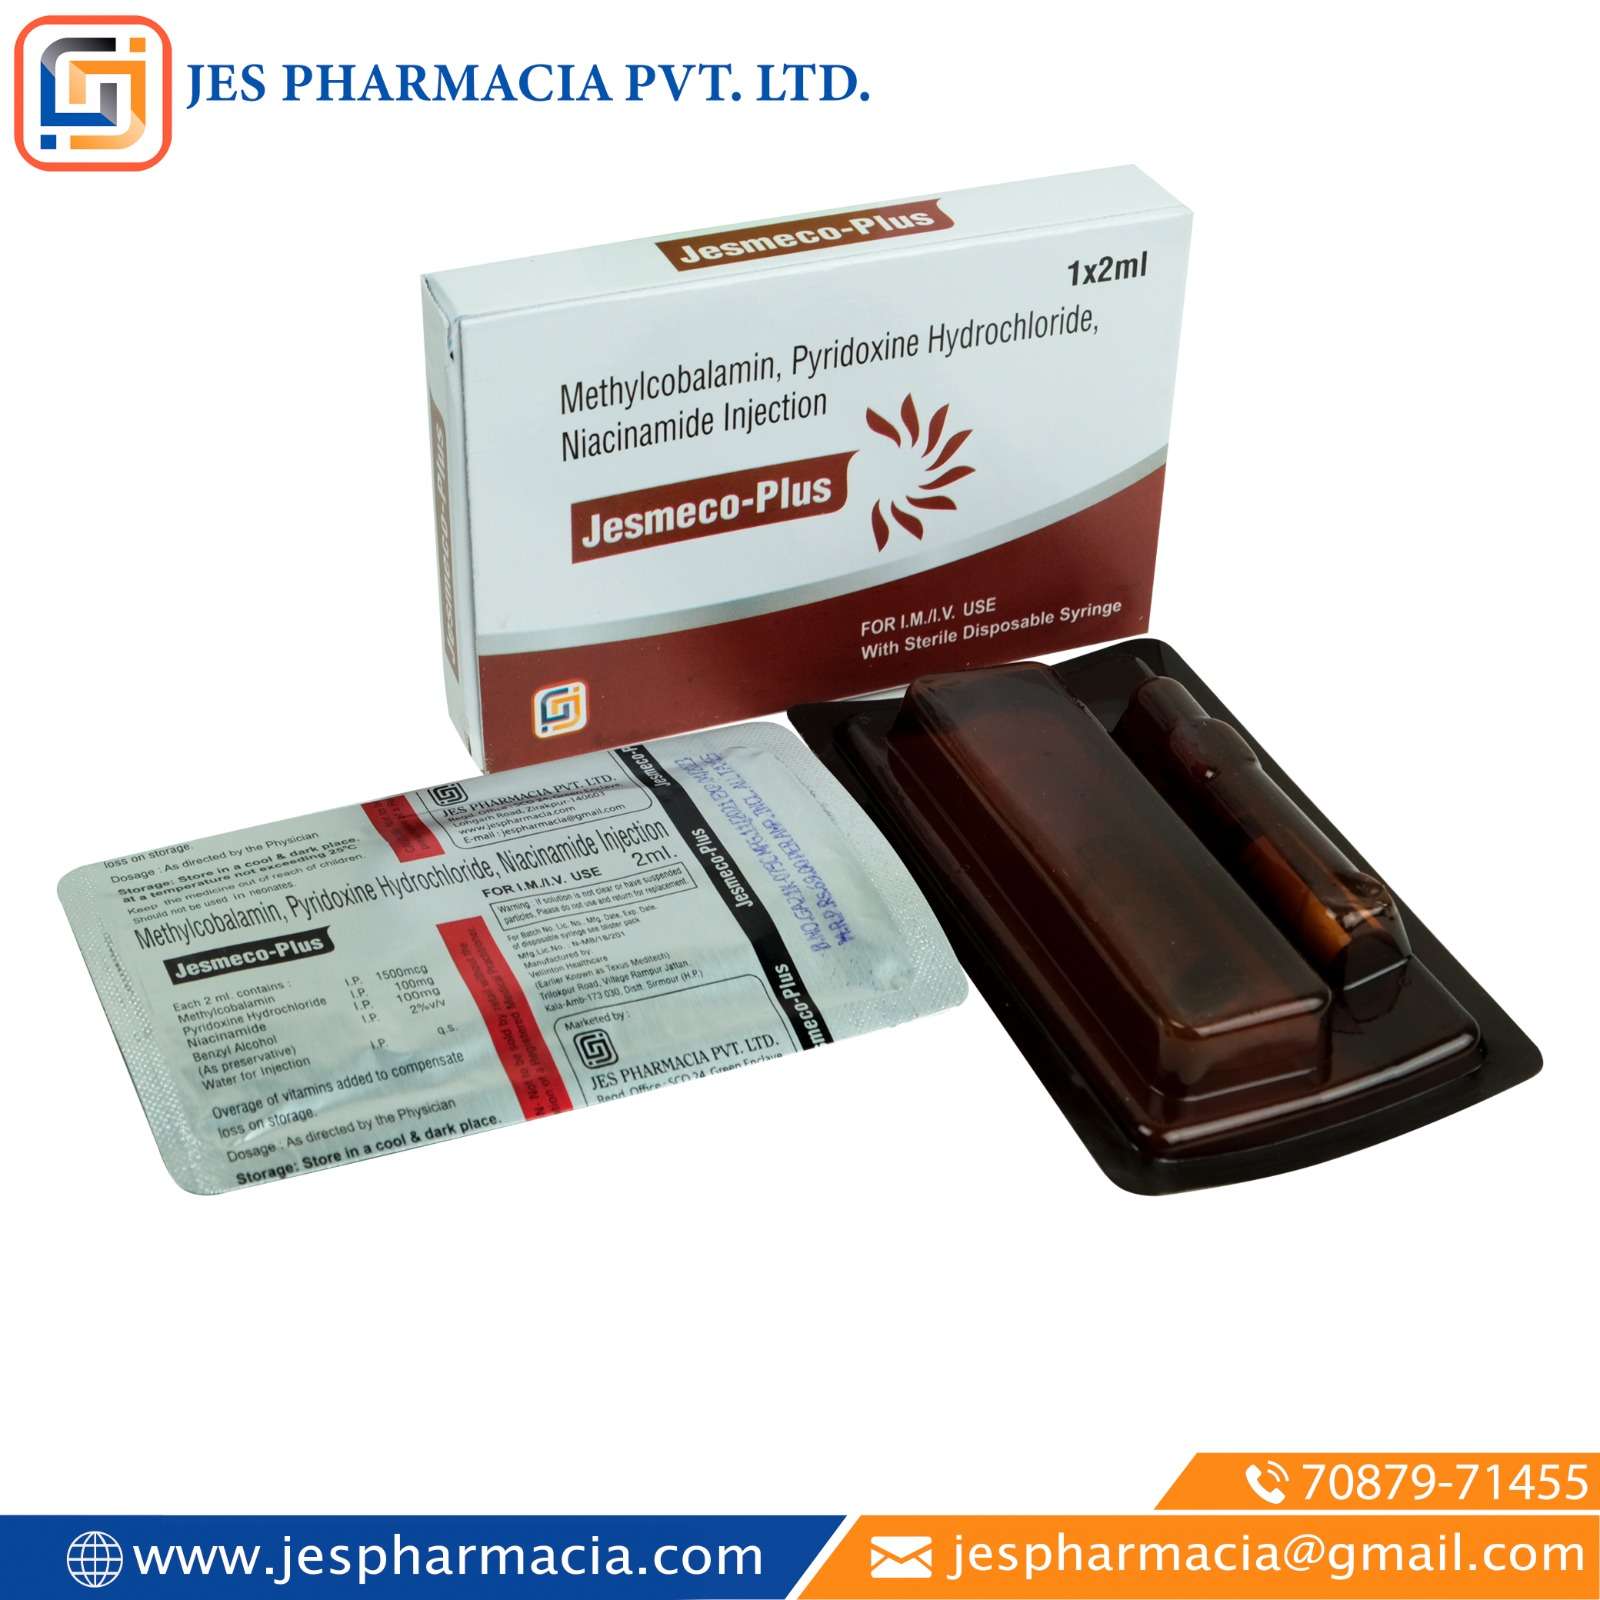 methylcobalamin 1500 mcg + pyridoxine hcl 100 mg + niacinamide 100 mg + benzyl alcohol 1.5 %
injection